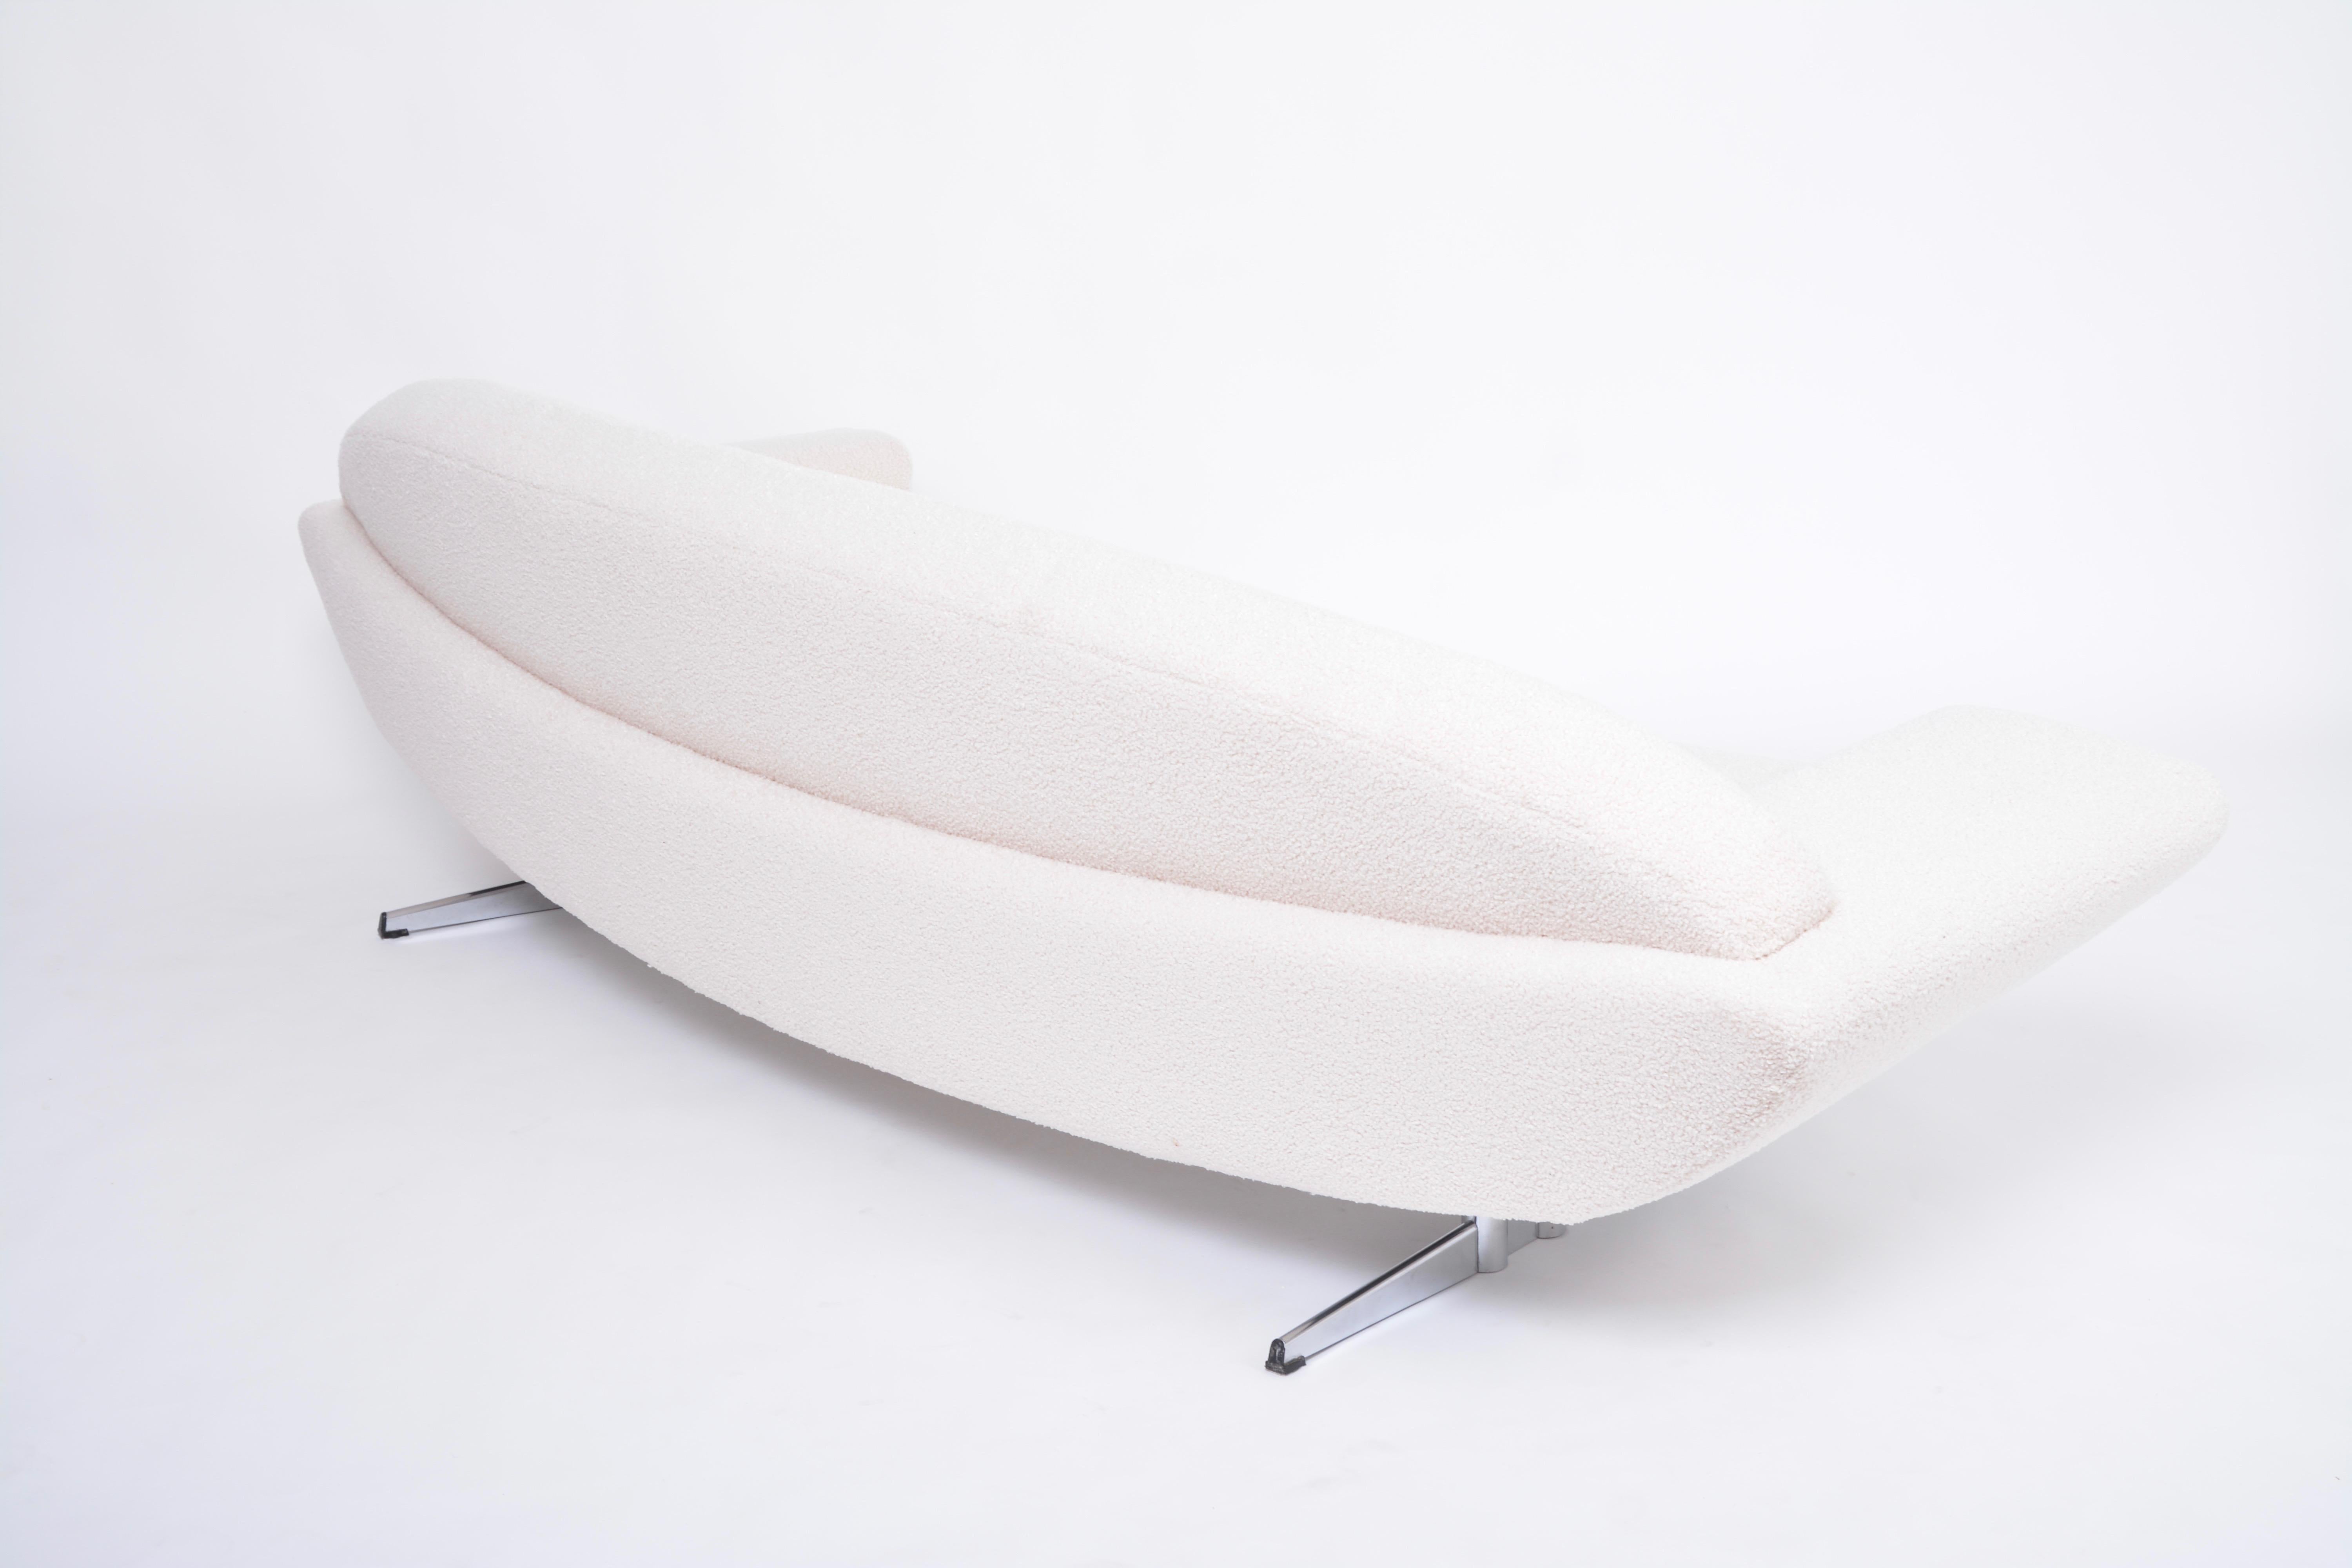 Midcentury Capri Sofa by Johannes Andersen Reupholstered in White Teddy Fur For Sale 1